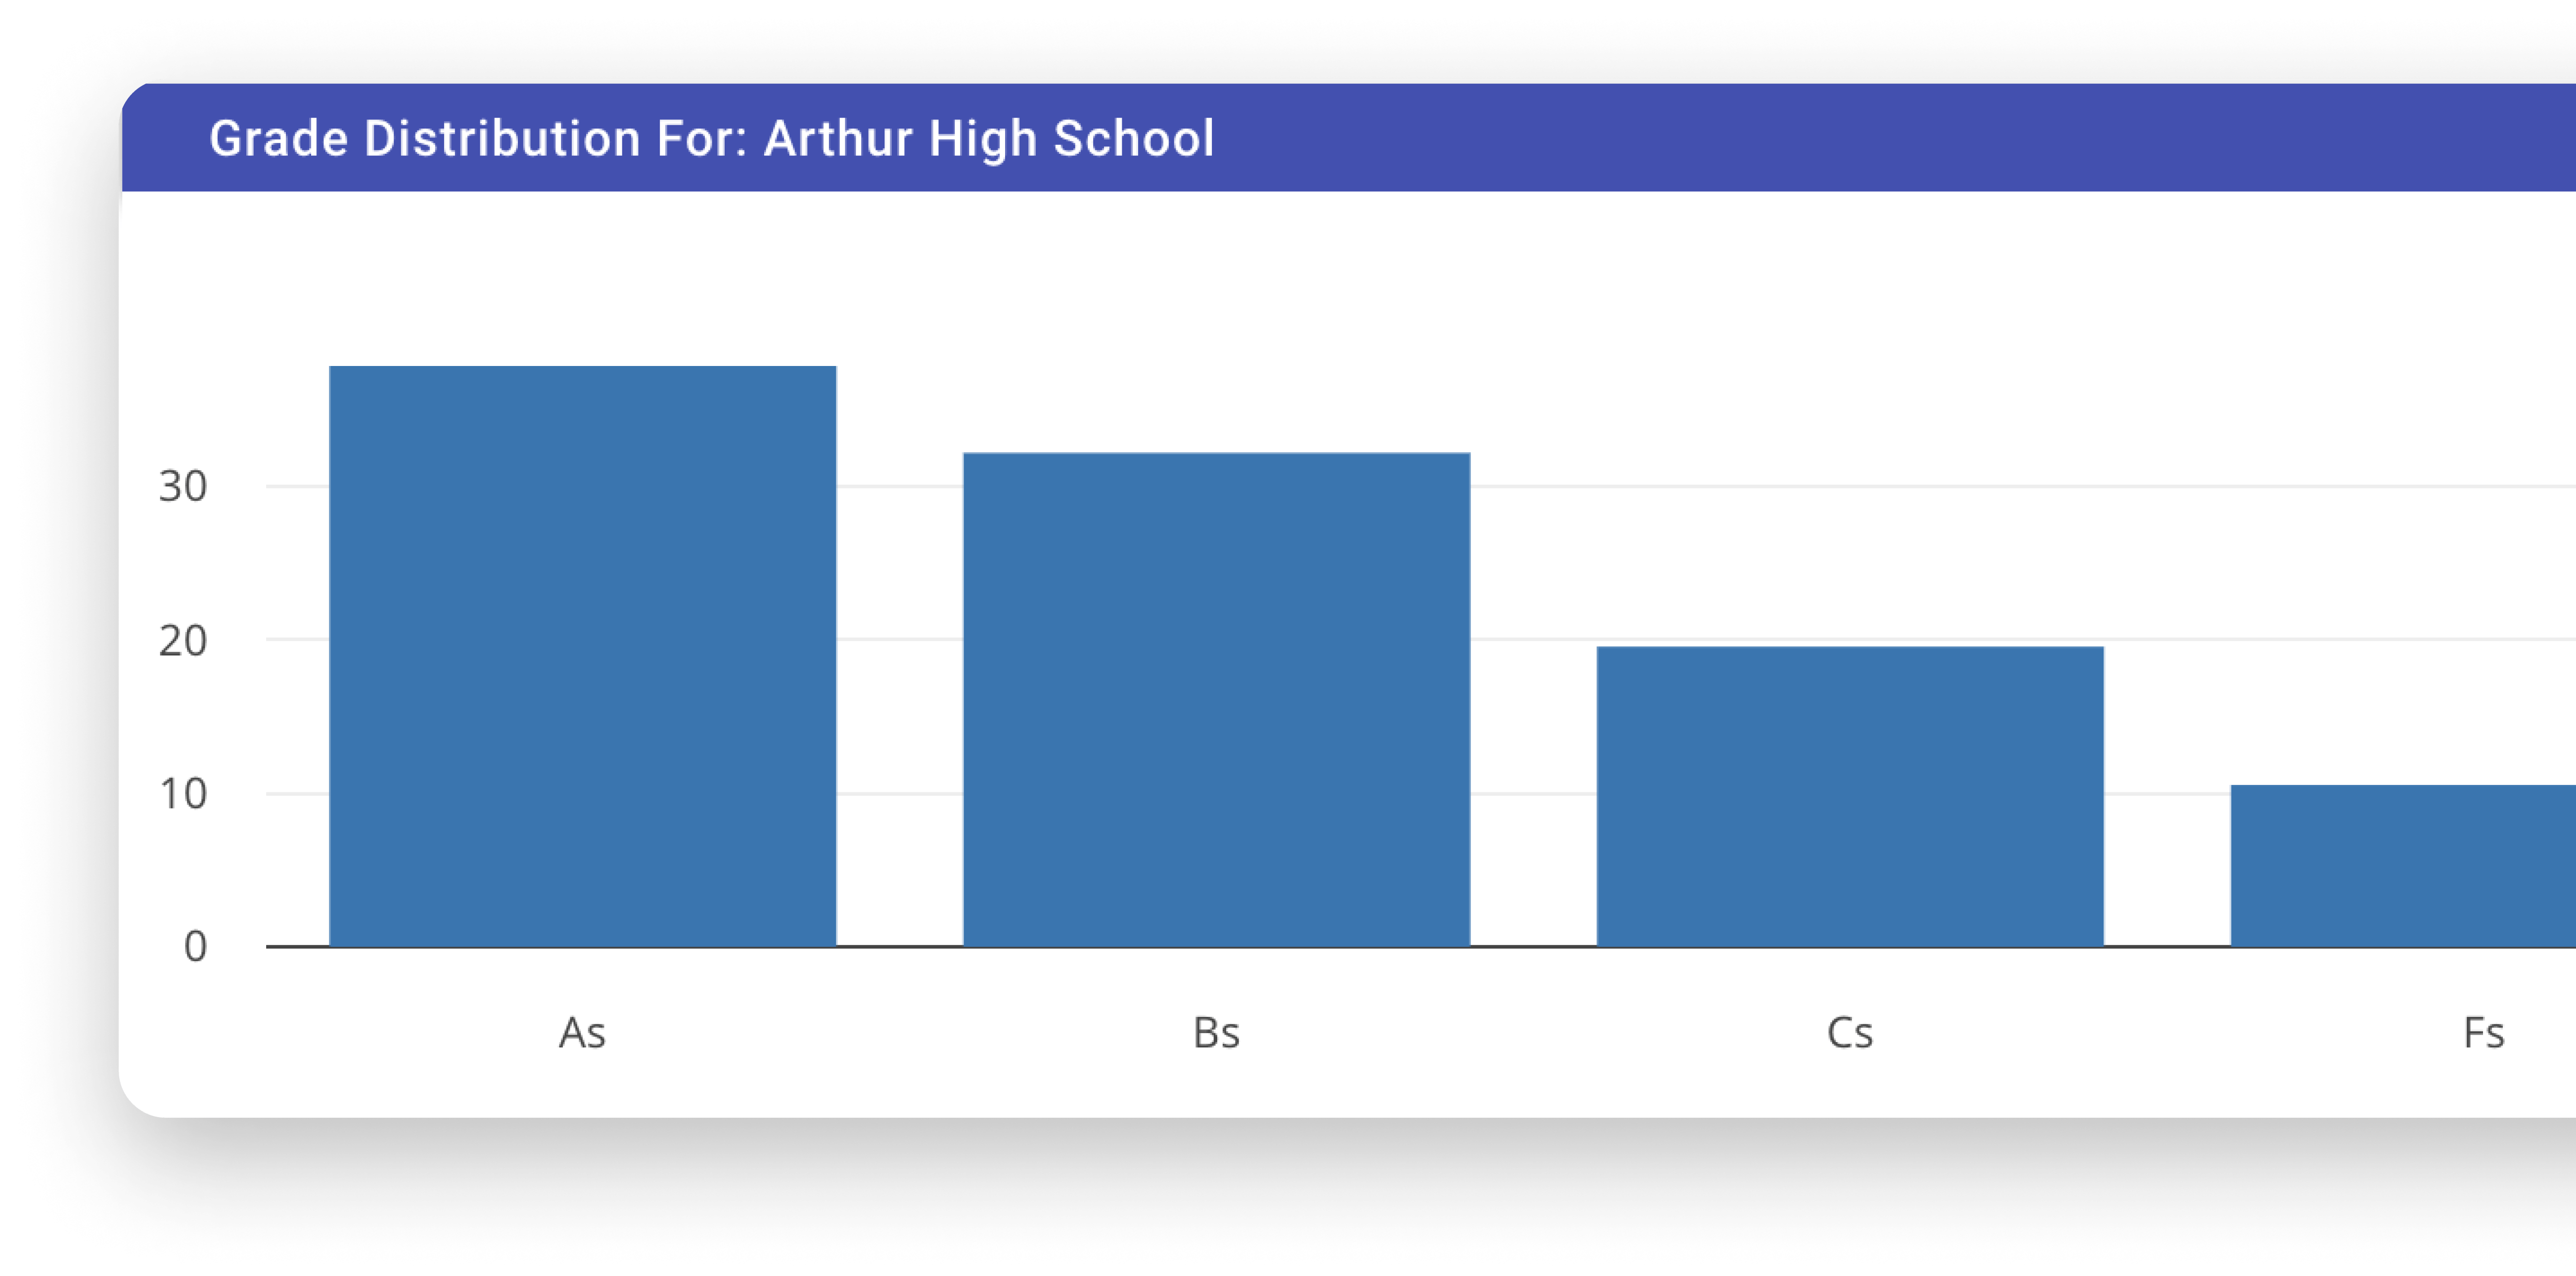 Grade Distribution For: Arthur High School